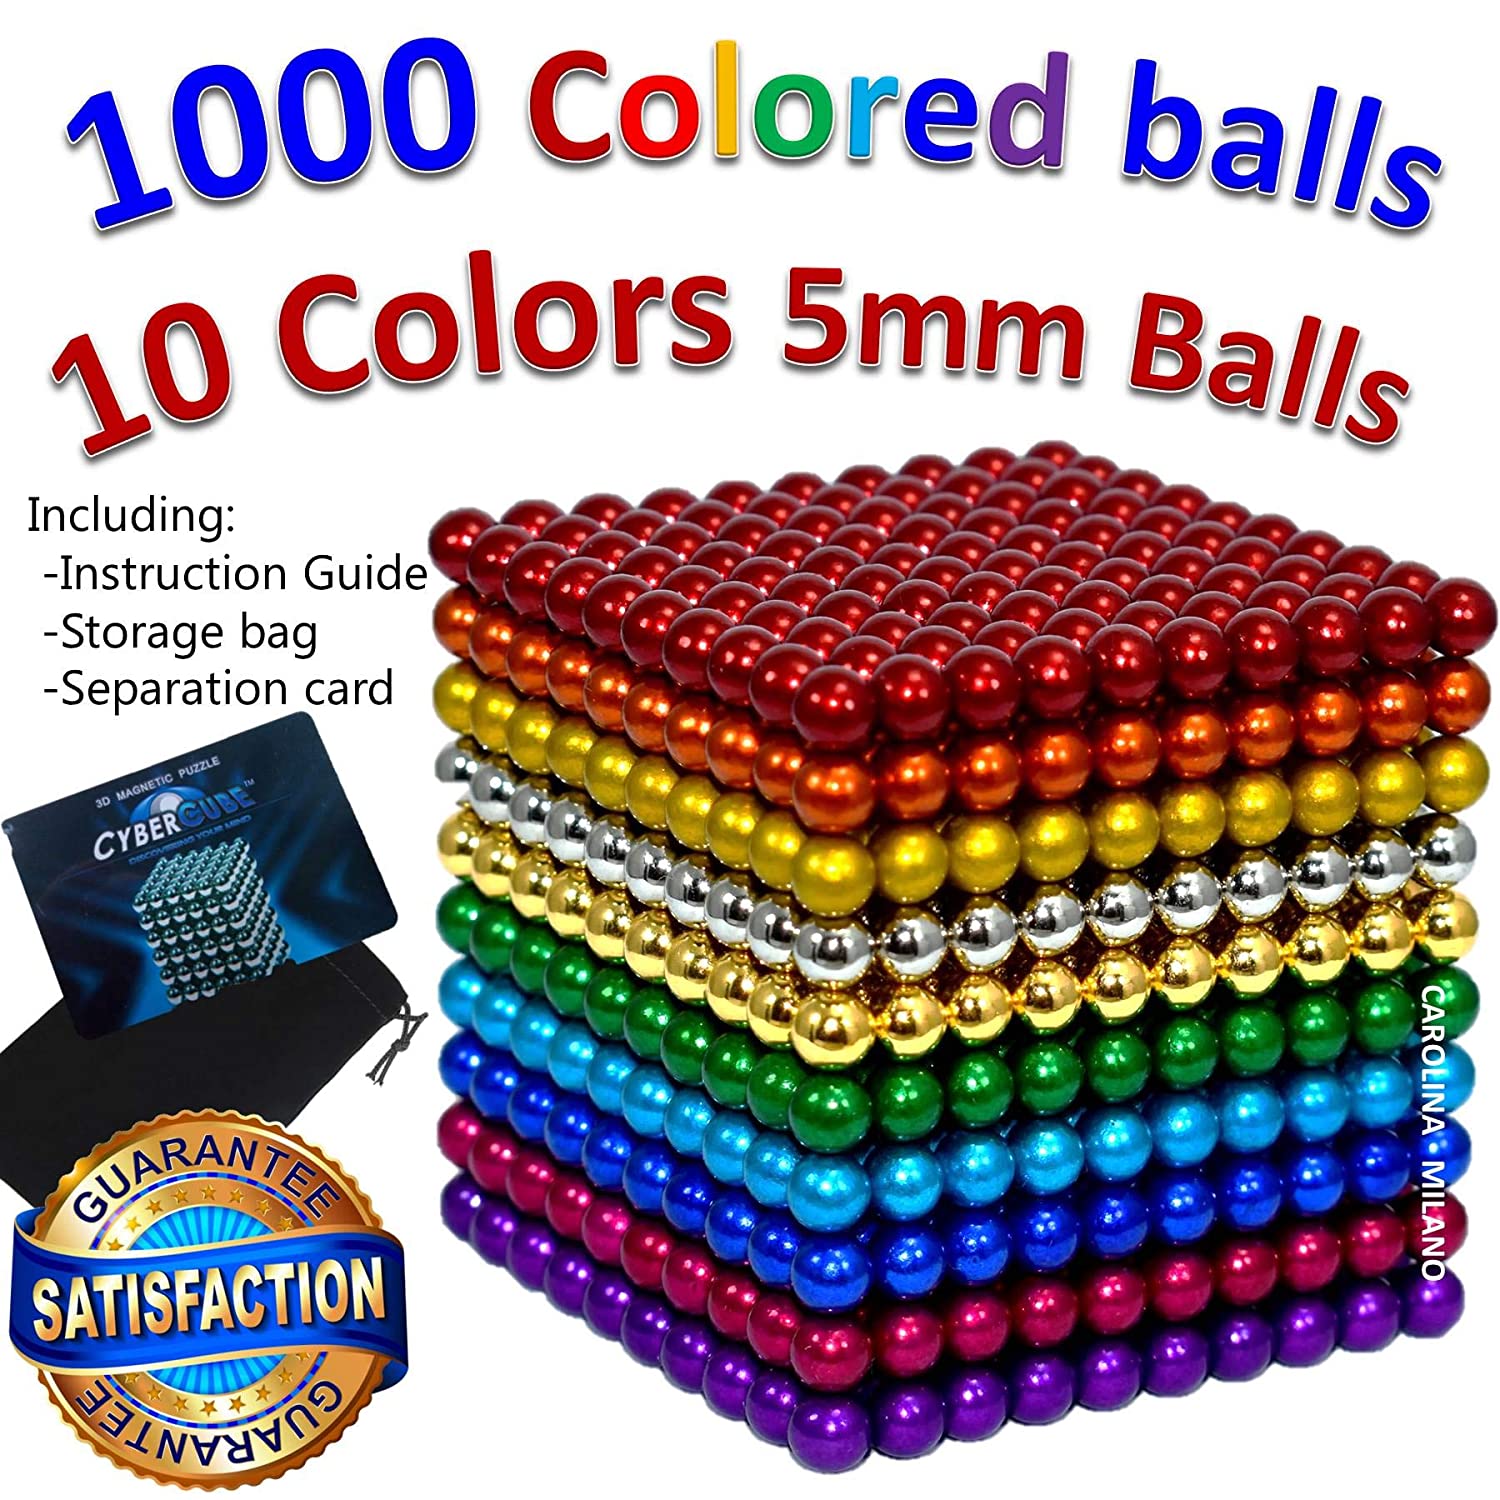 1000 pcs 5mm 10 Colors Multicolored Large Balls Toy Building Blocks